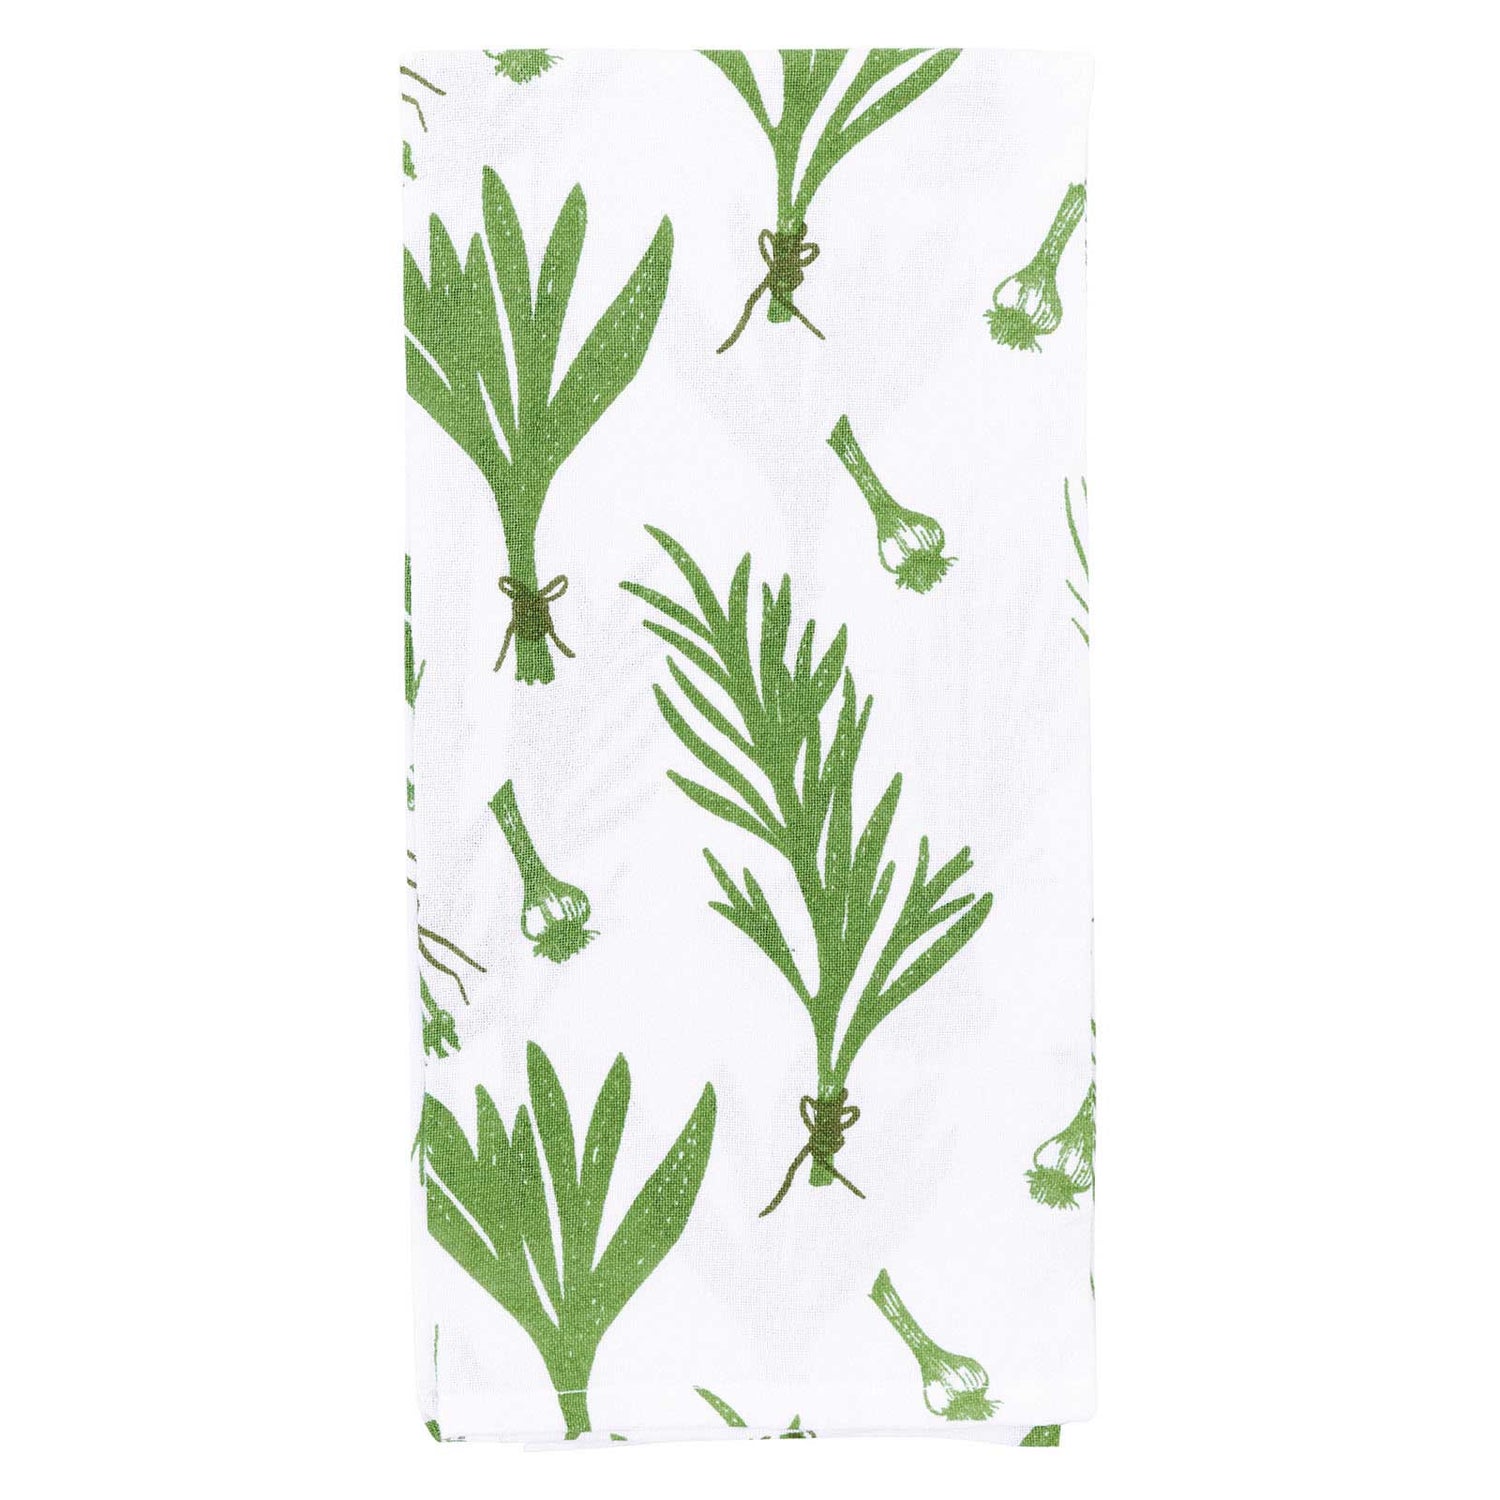 rockflowerpaper Hydrangea and Stripes Kitchen Towels - Set of 3